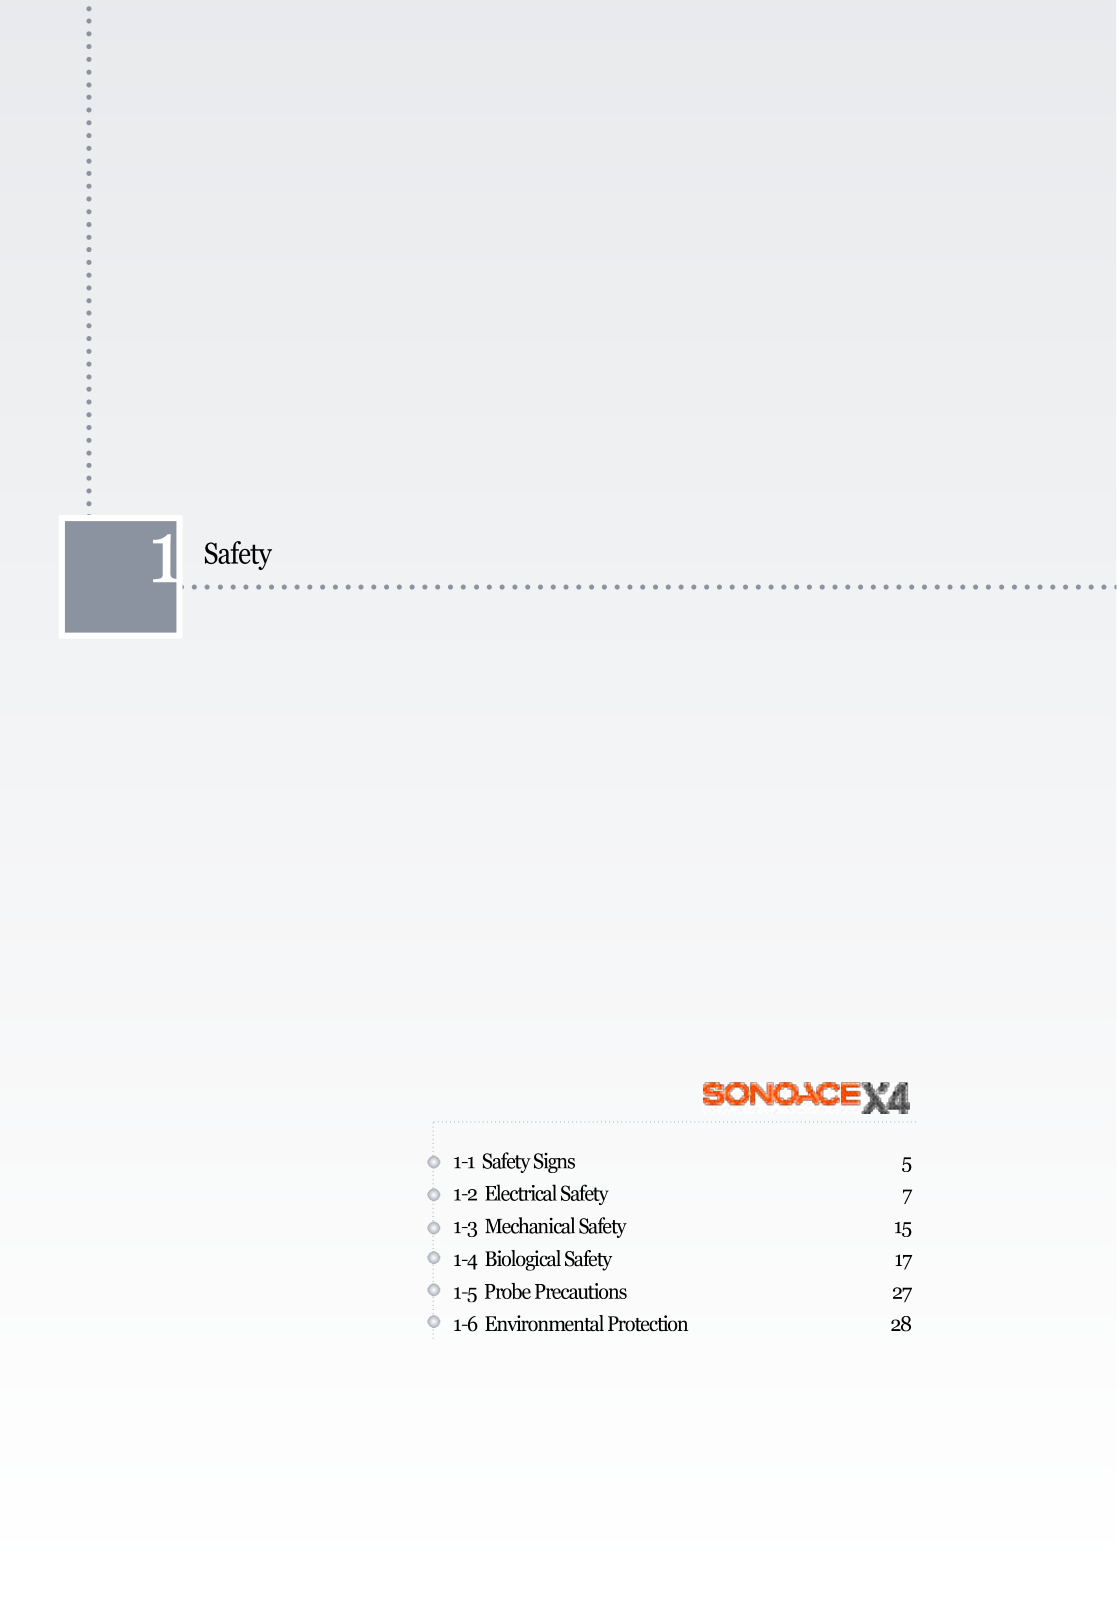 Samsung SonoAce X4 Service manual